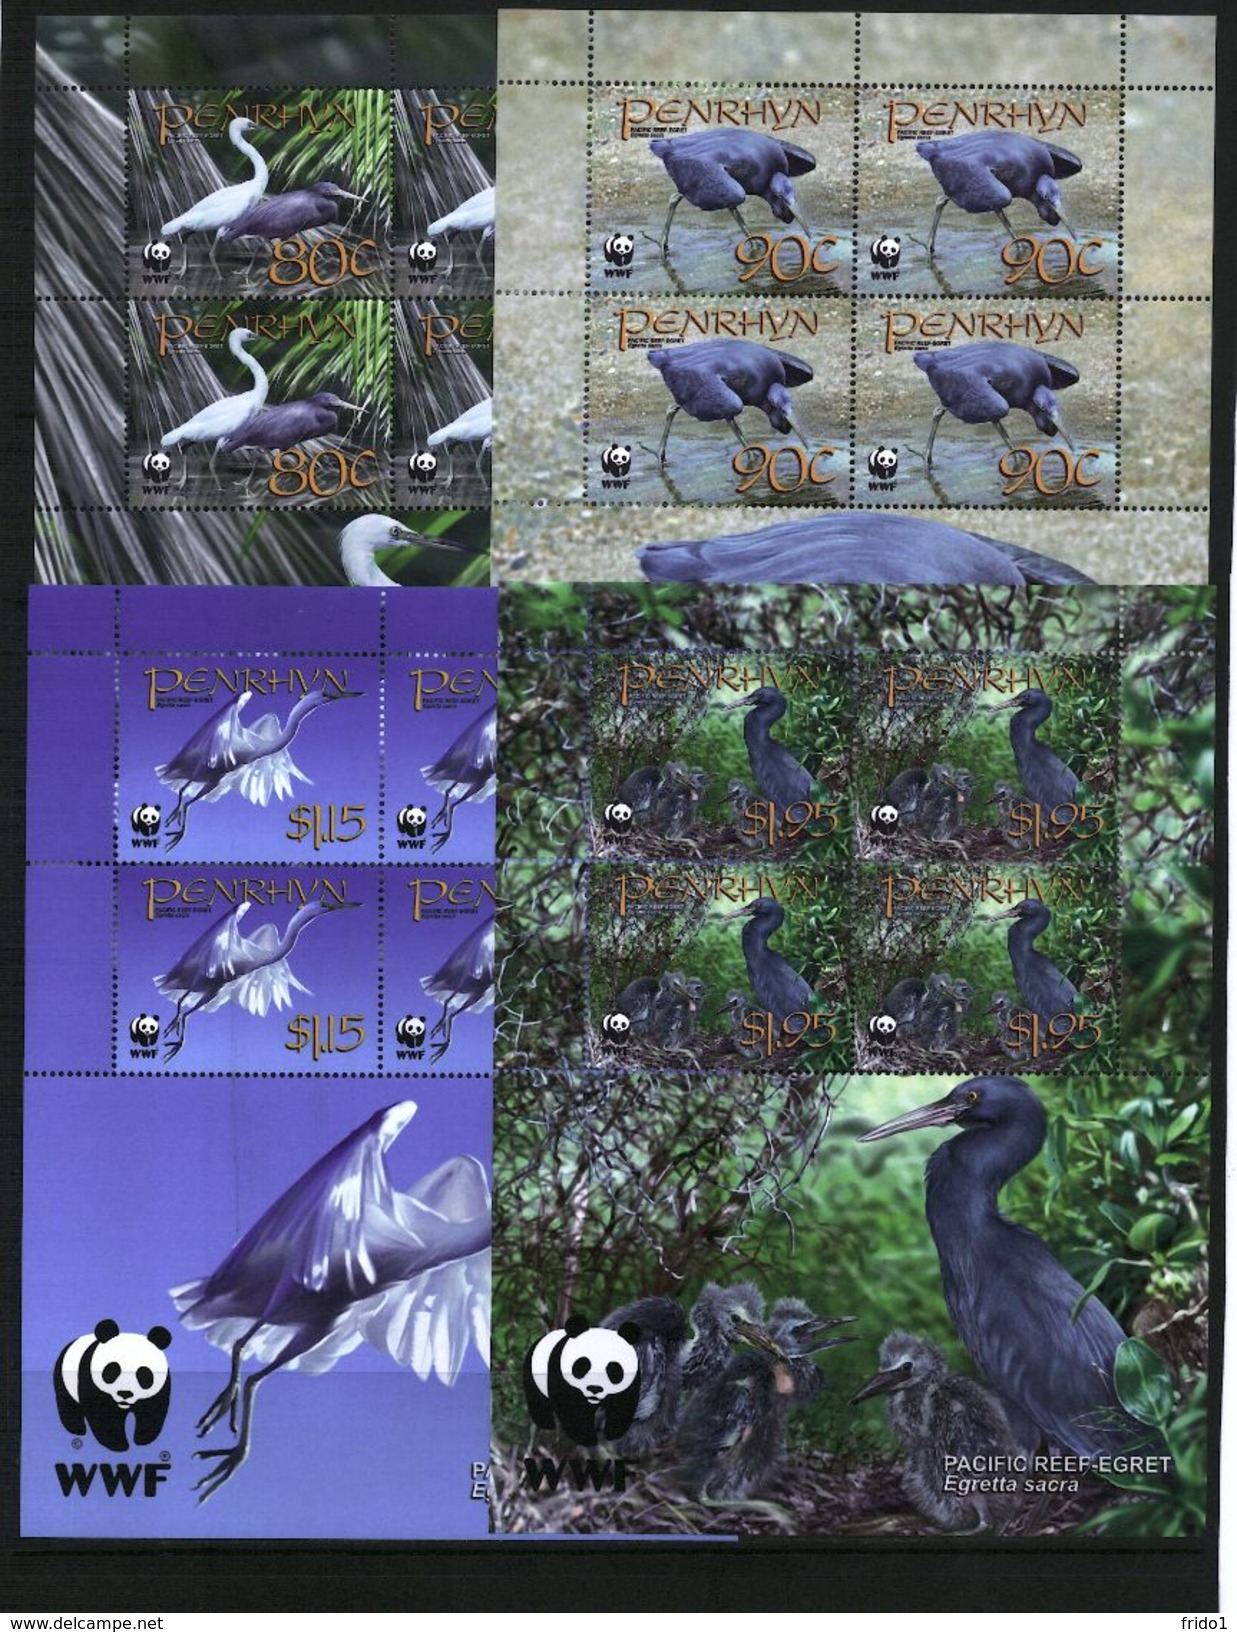 Pebrhyn Islands 2008 WWF Birds Complete Sheets MNH / Postfrisch - Penrhyn